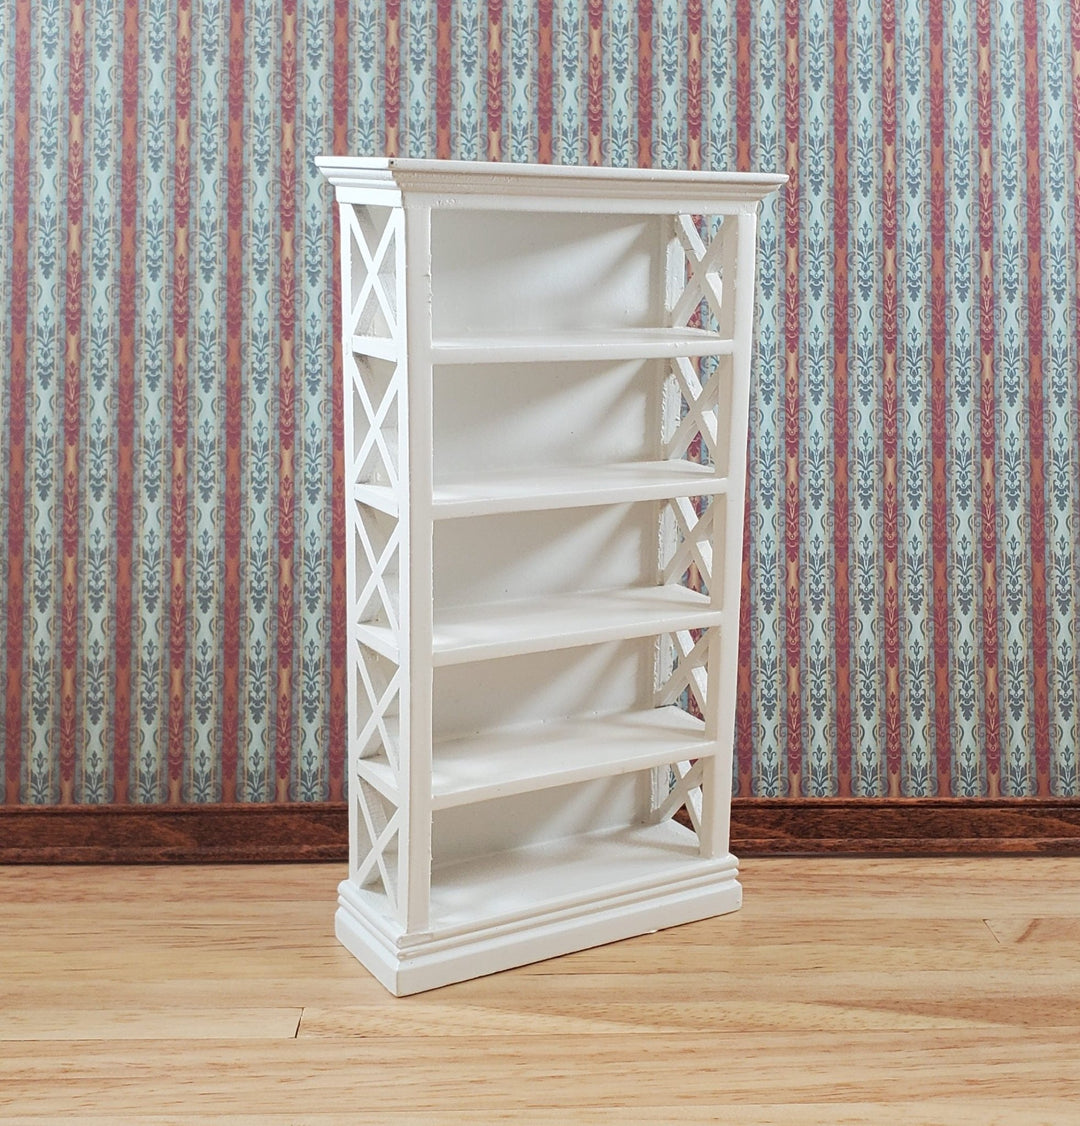 Dollhouse Bookcase White Wood Bookshelf 1:12 Scale Miniature Furniture Shelves - Miniature Crush